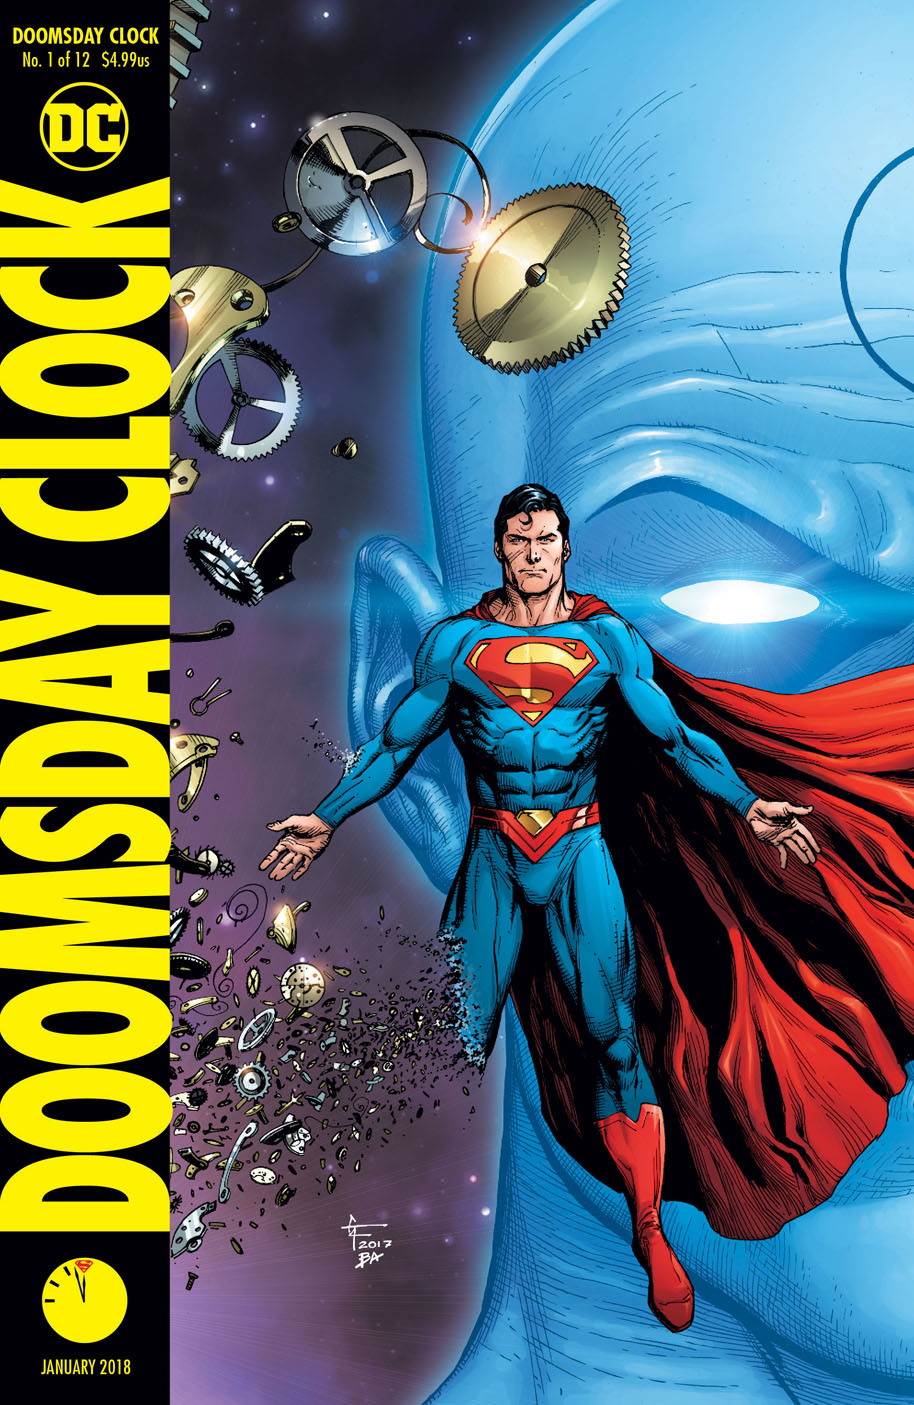 103 -  [DC COMICS] Publicaciones Universo DC: Discusión General v2 - Página 10 Variant-cover-of-doomsday-clock-1-with-superman-and-doctor-manhattan